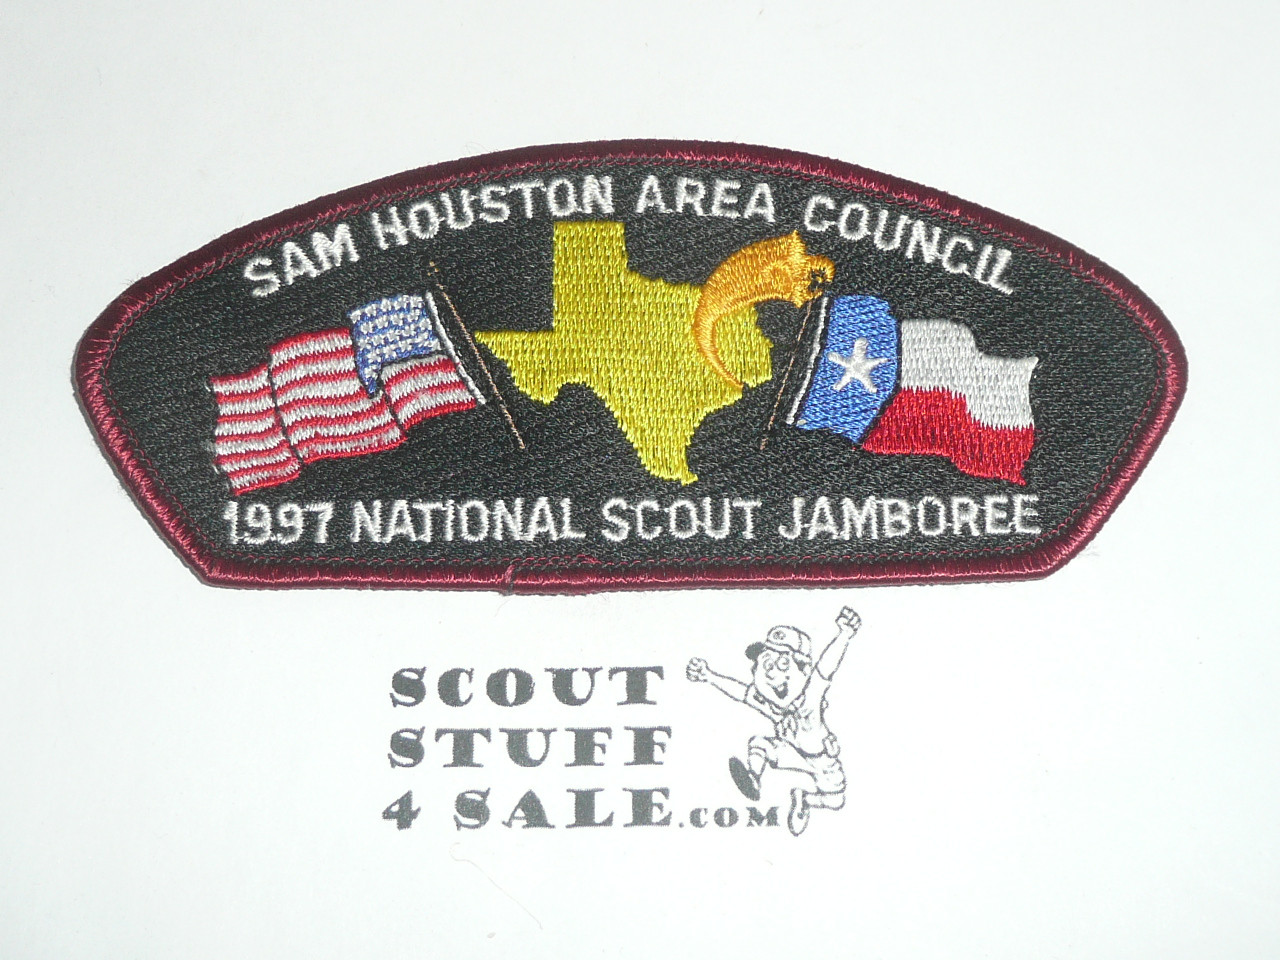 1997 National Jamboree JSP - Sam Houston Area Council, maroon bdr